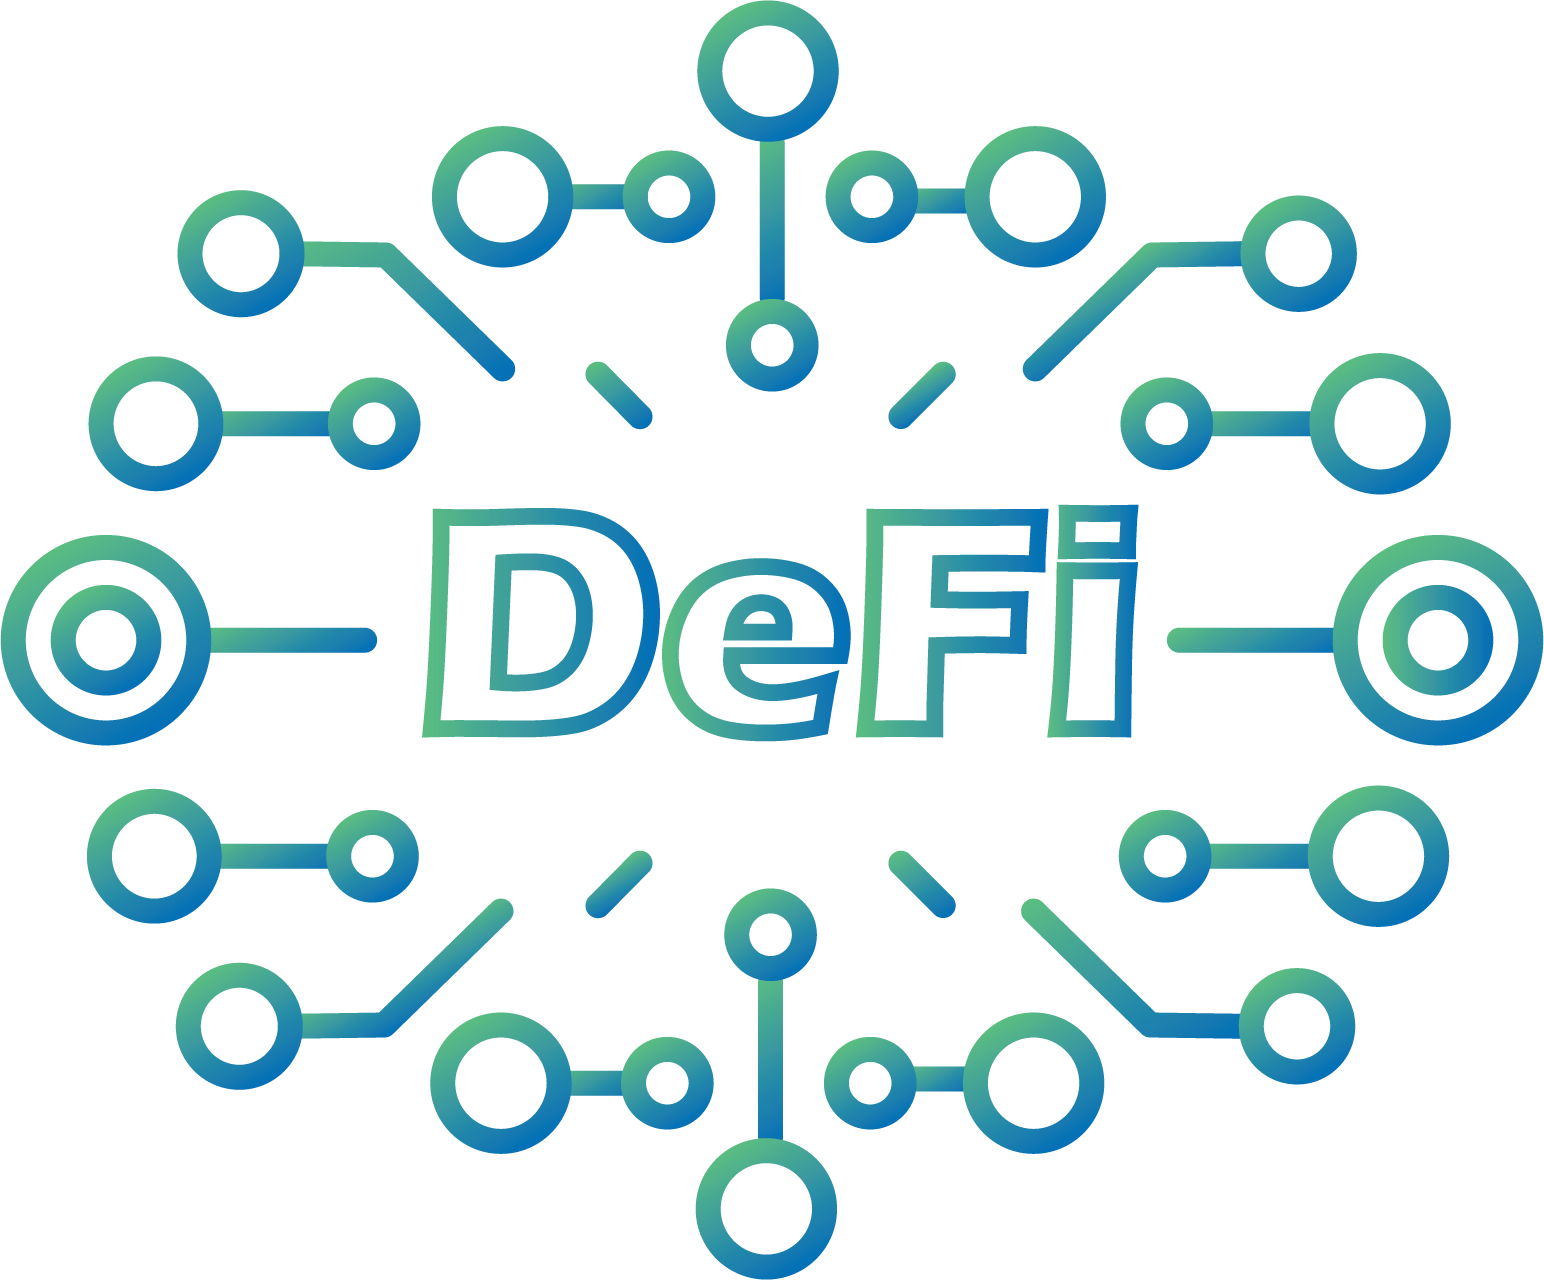 DeFi Logo